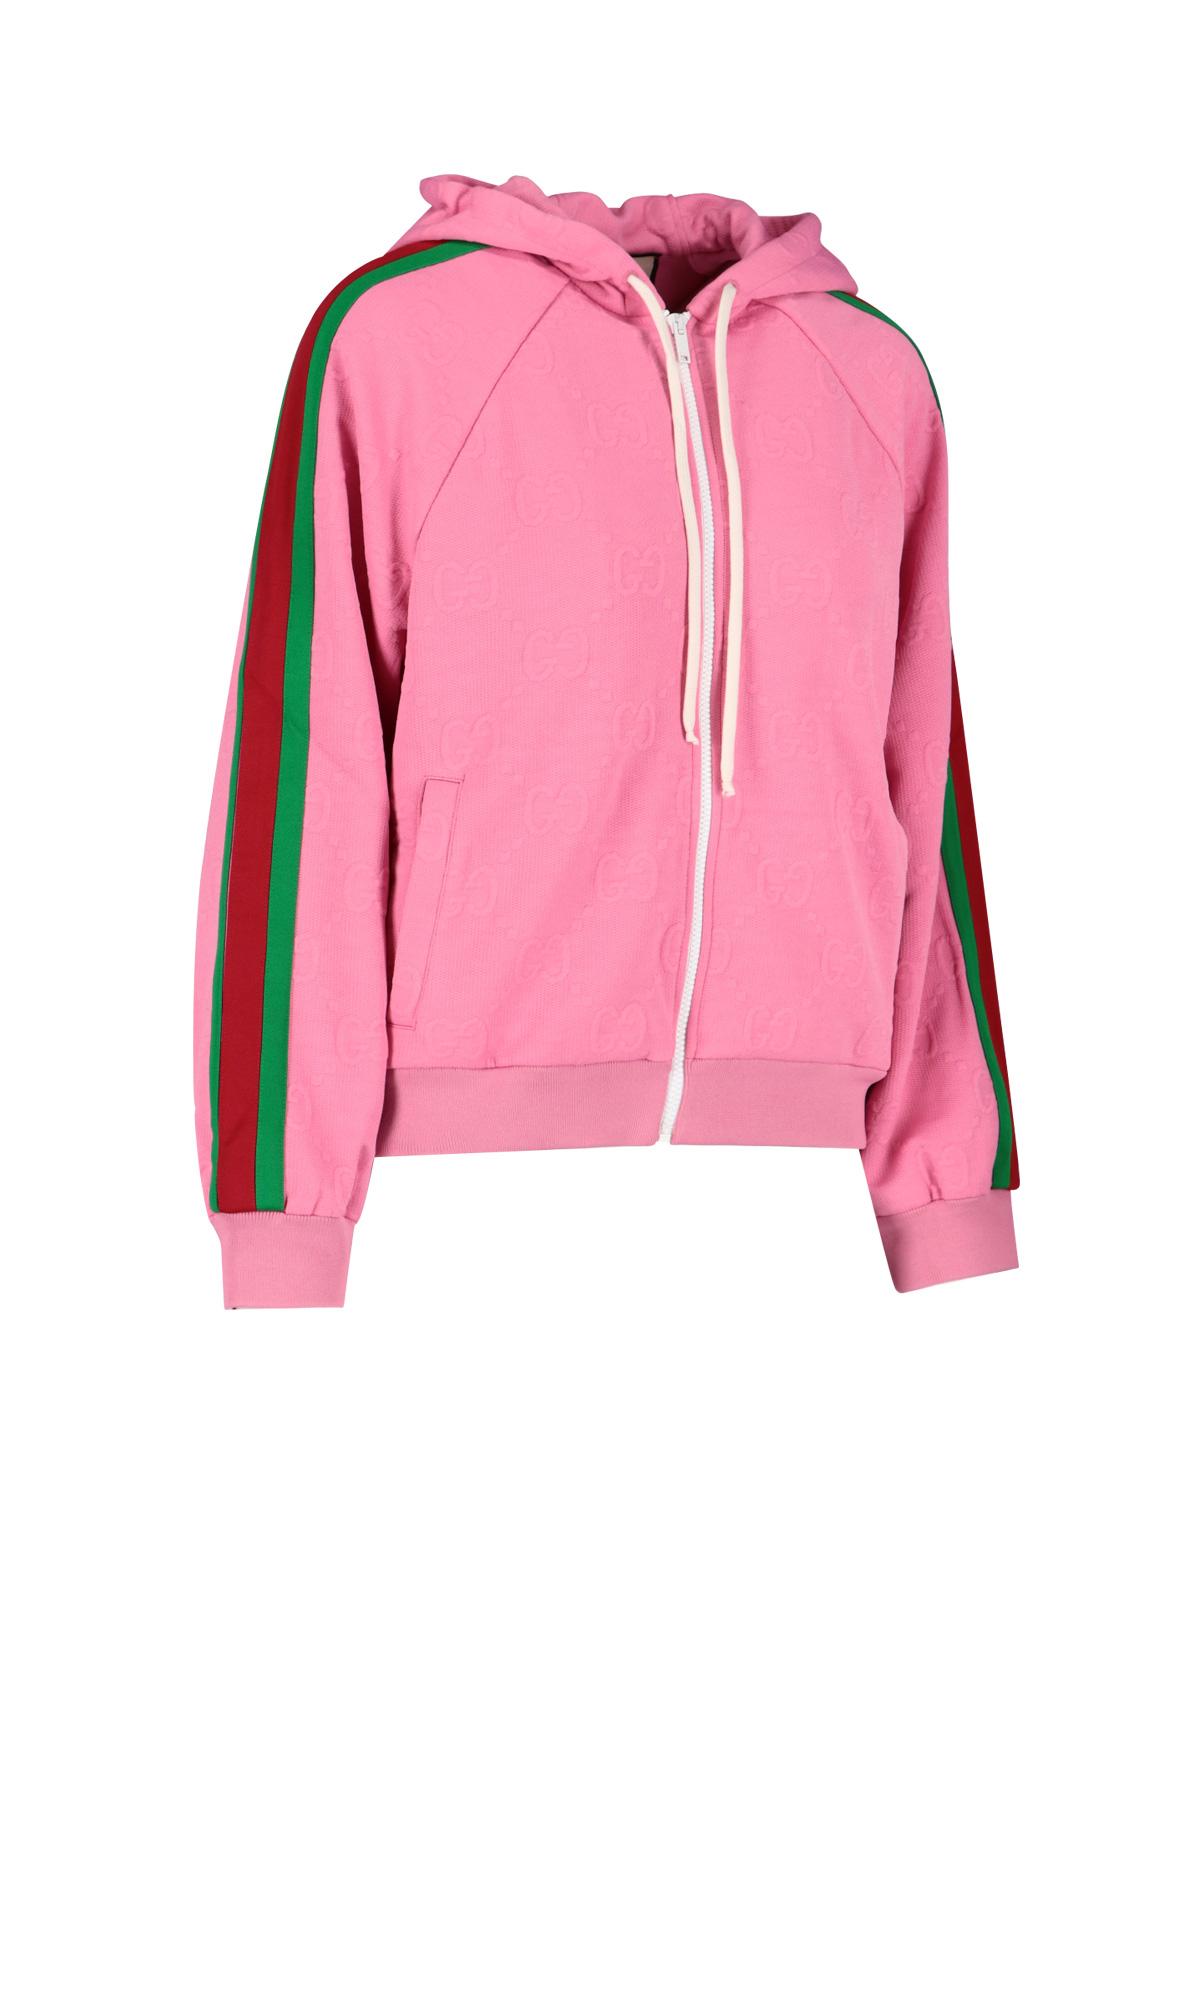 Gucci 'GG' Jacquard Zip Sweatshirt in Pink | Lyst